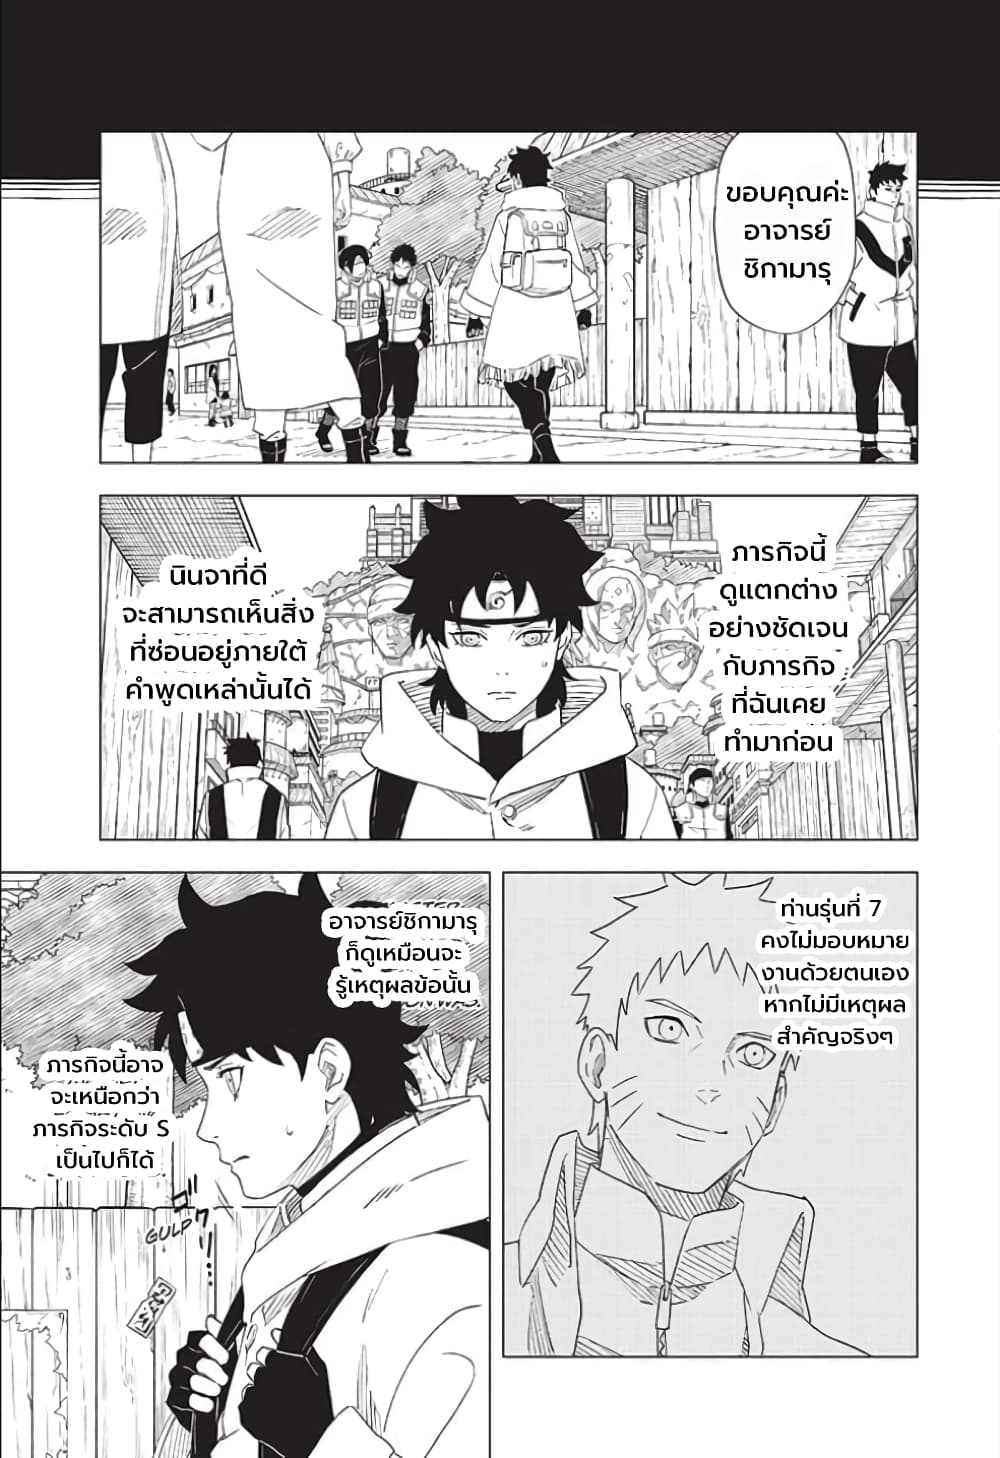 Naruto Konoha’s Story – The Steam Ninja Scrolls The Manga 2 25